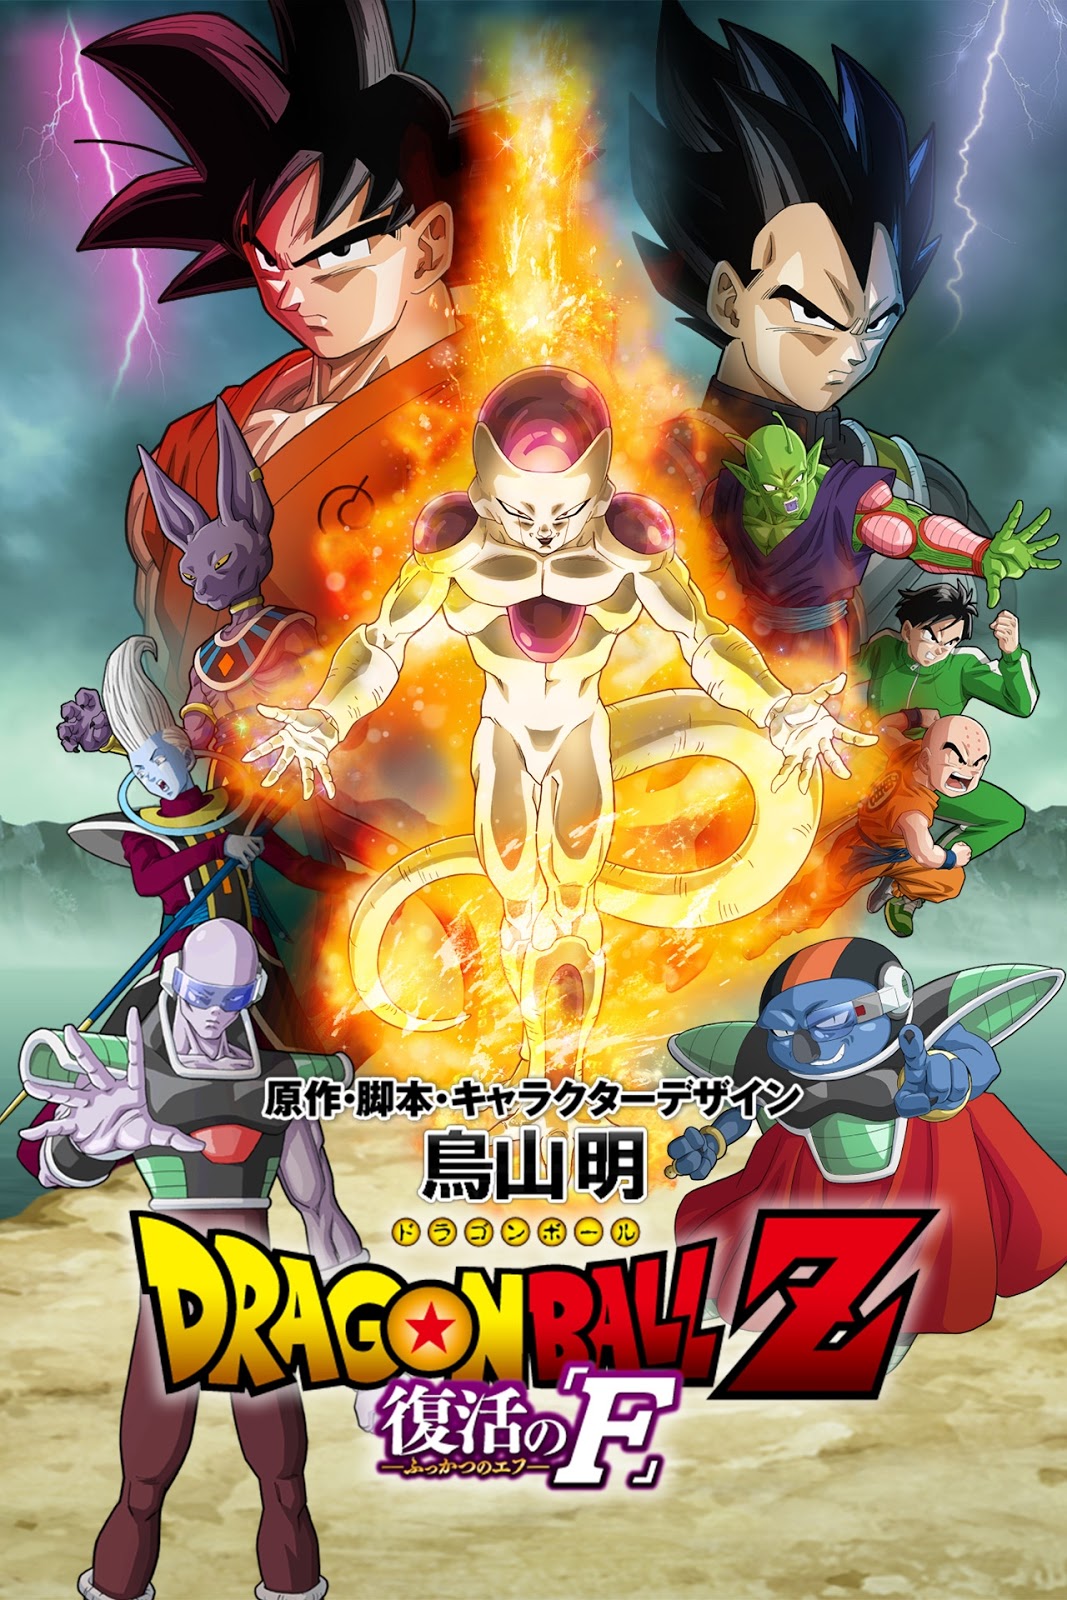 Dragon Ball Z: Resurrection 'F' 2015